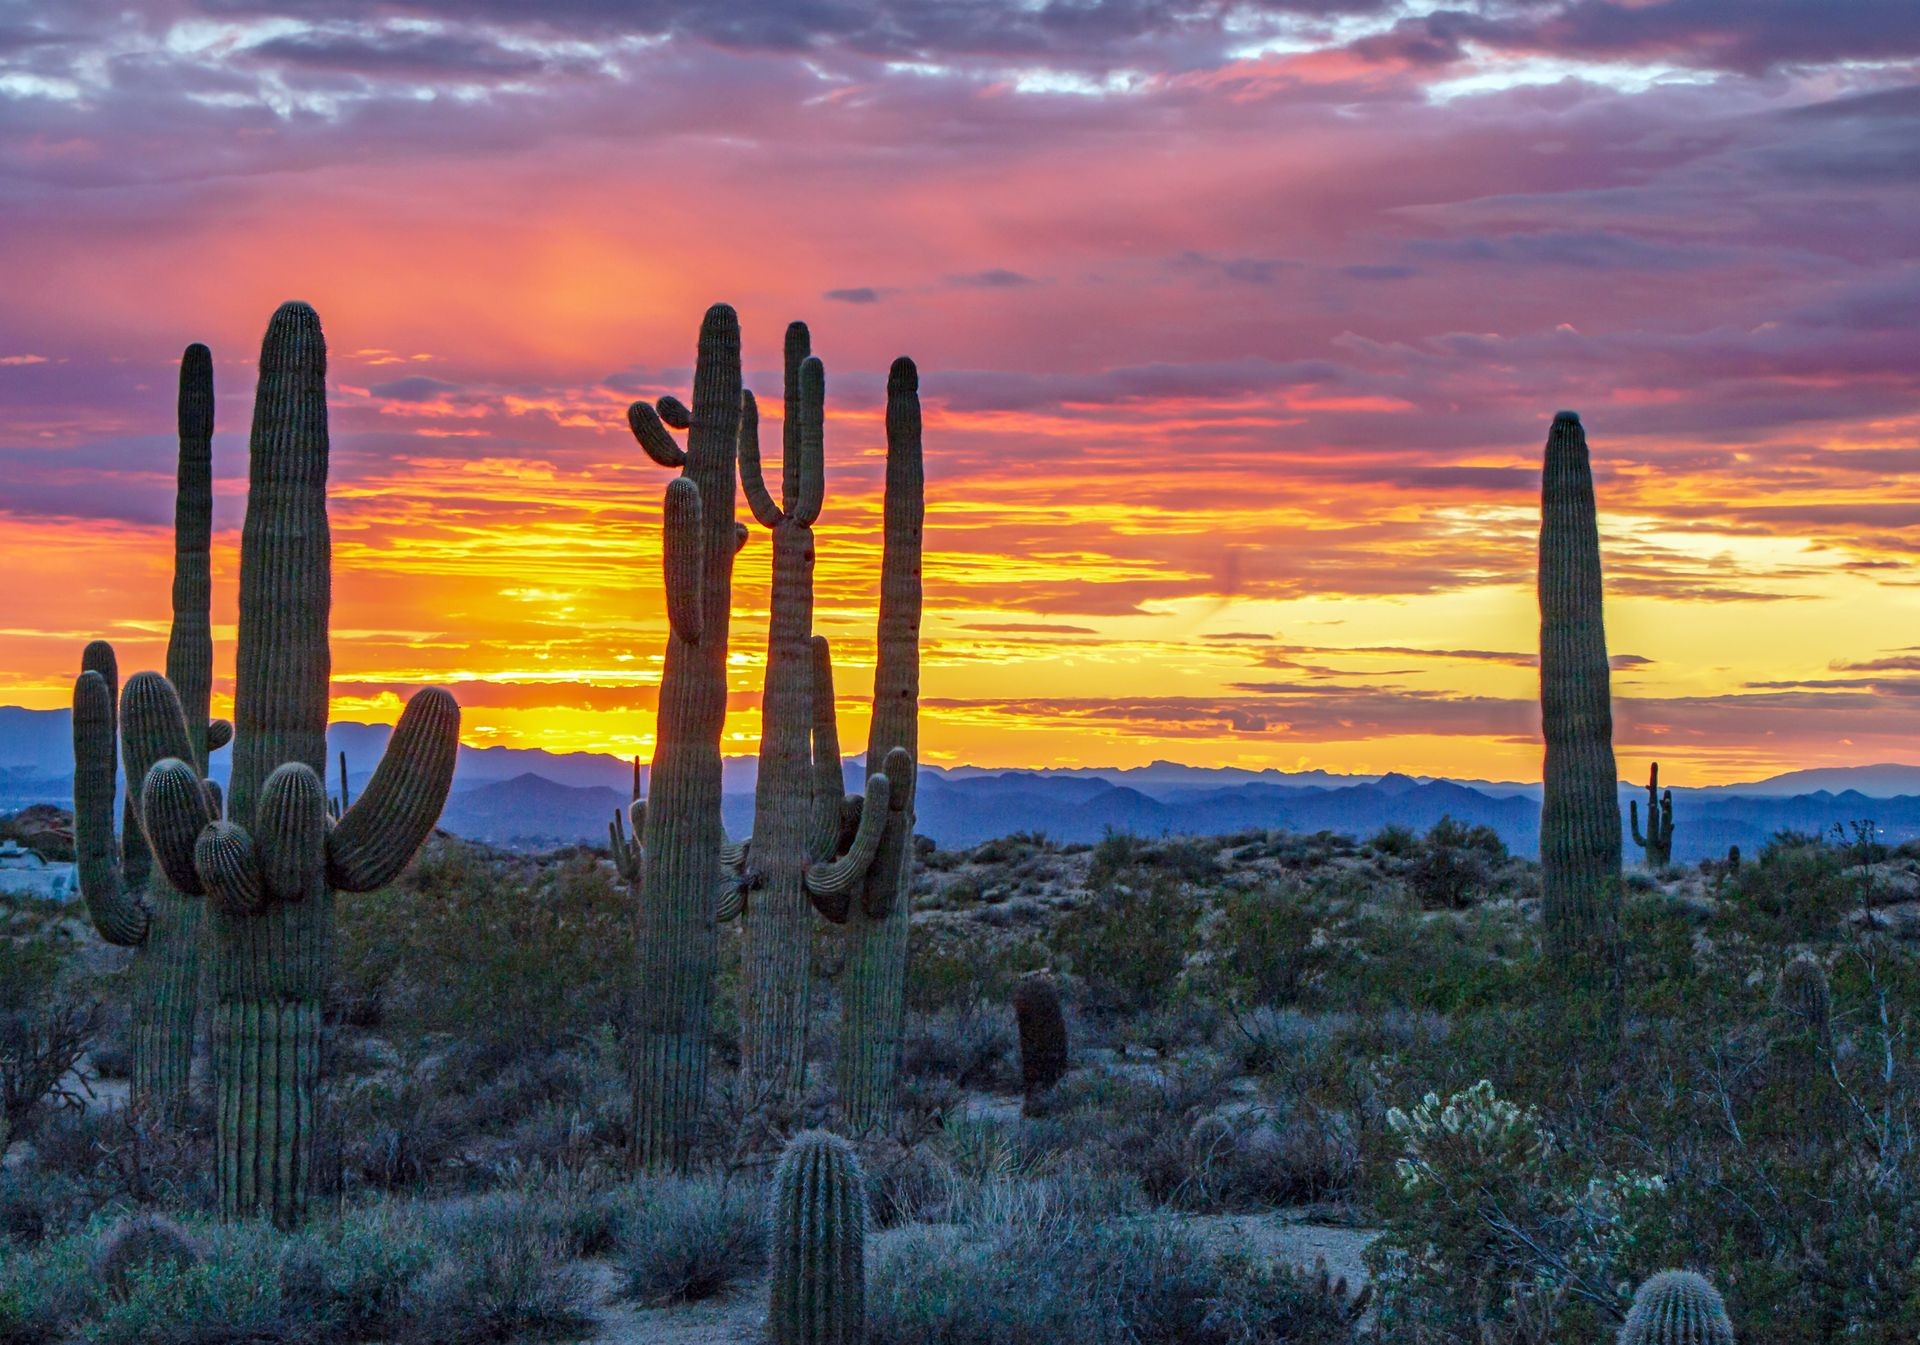 Arizona sunset with Saguaro cactus in background in Desert preserve near Scottsdale.